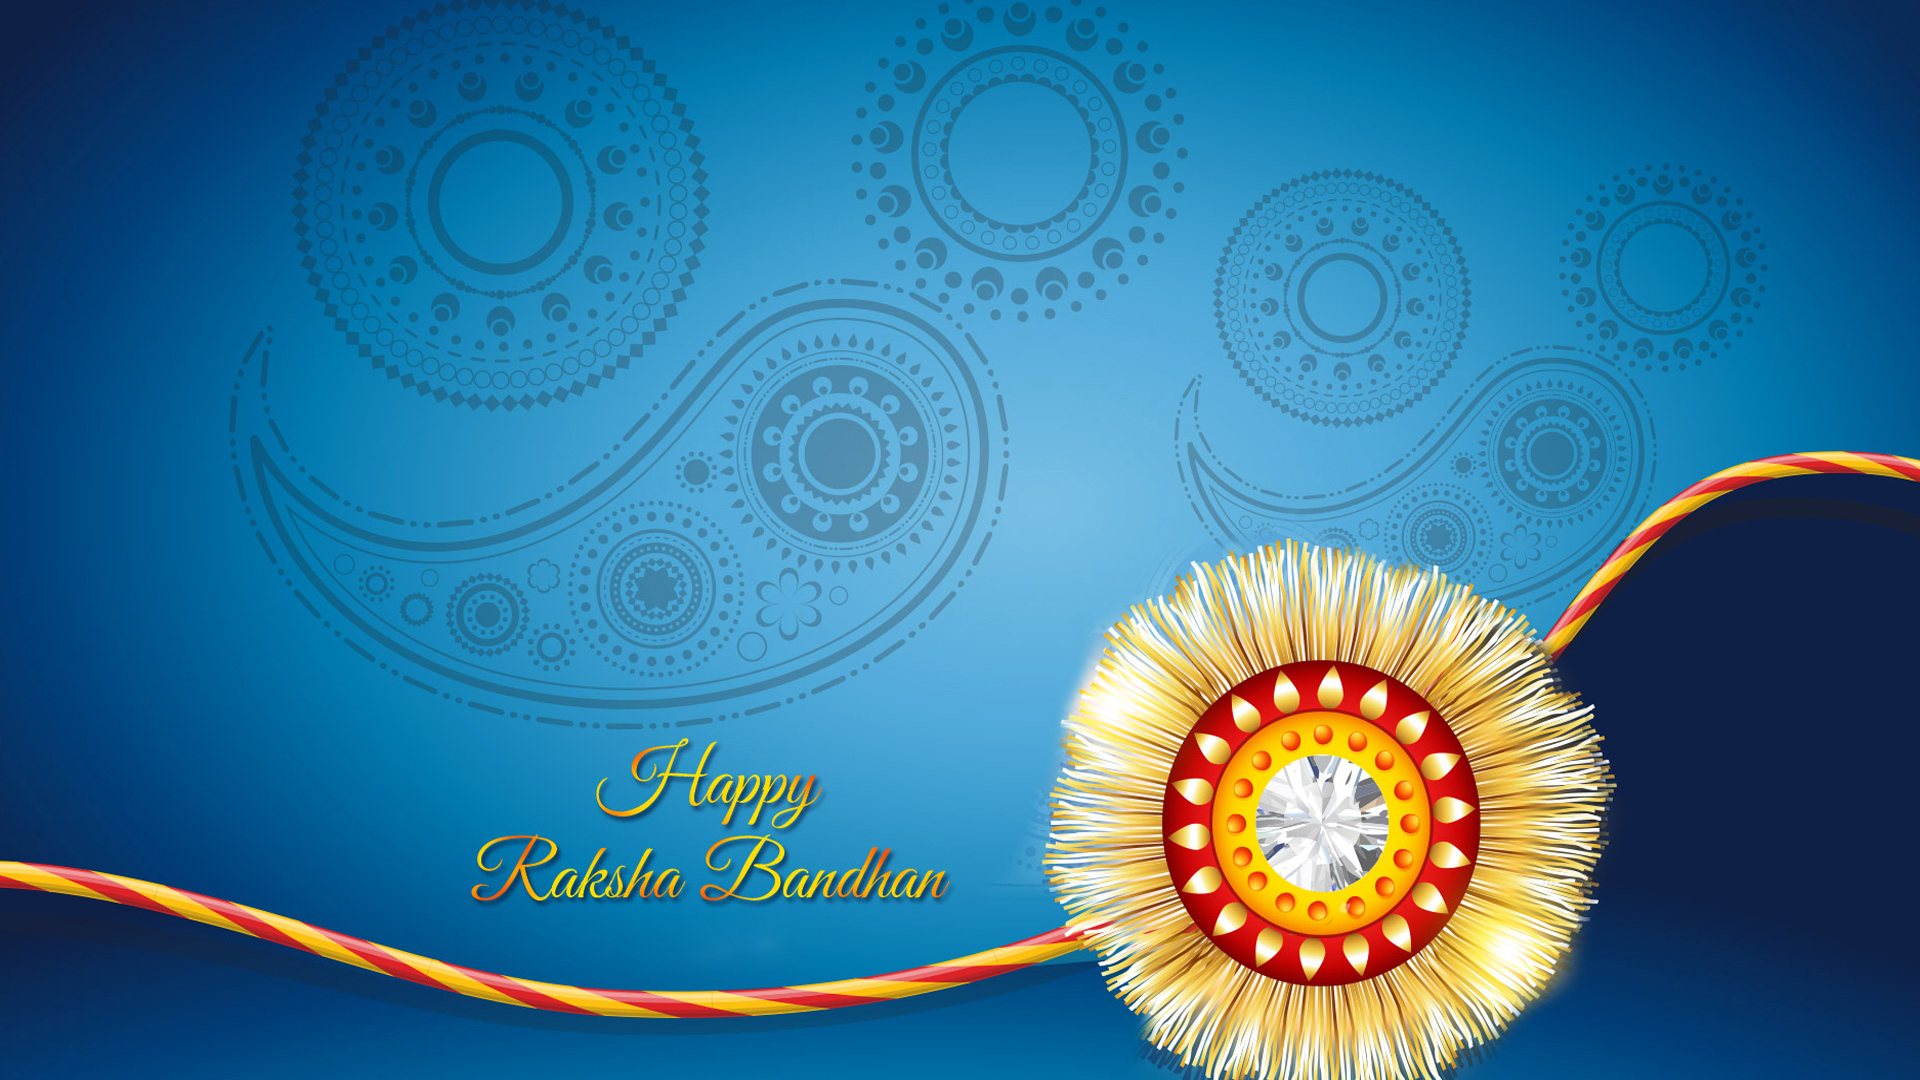 Happy Rakhi Bandhan Wallpaper with Blue Background - HD ...